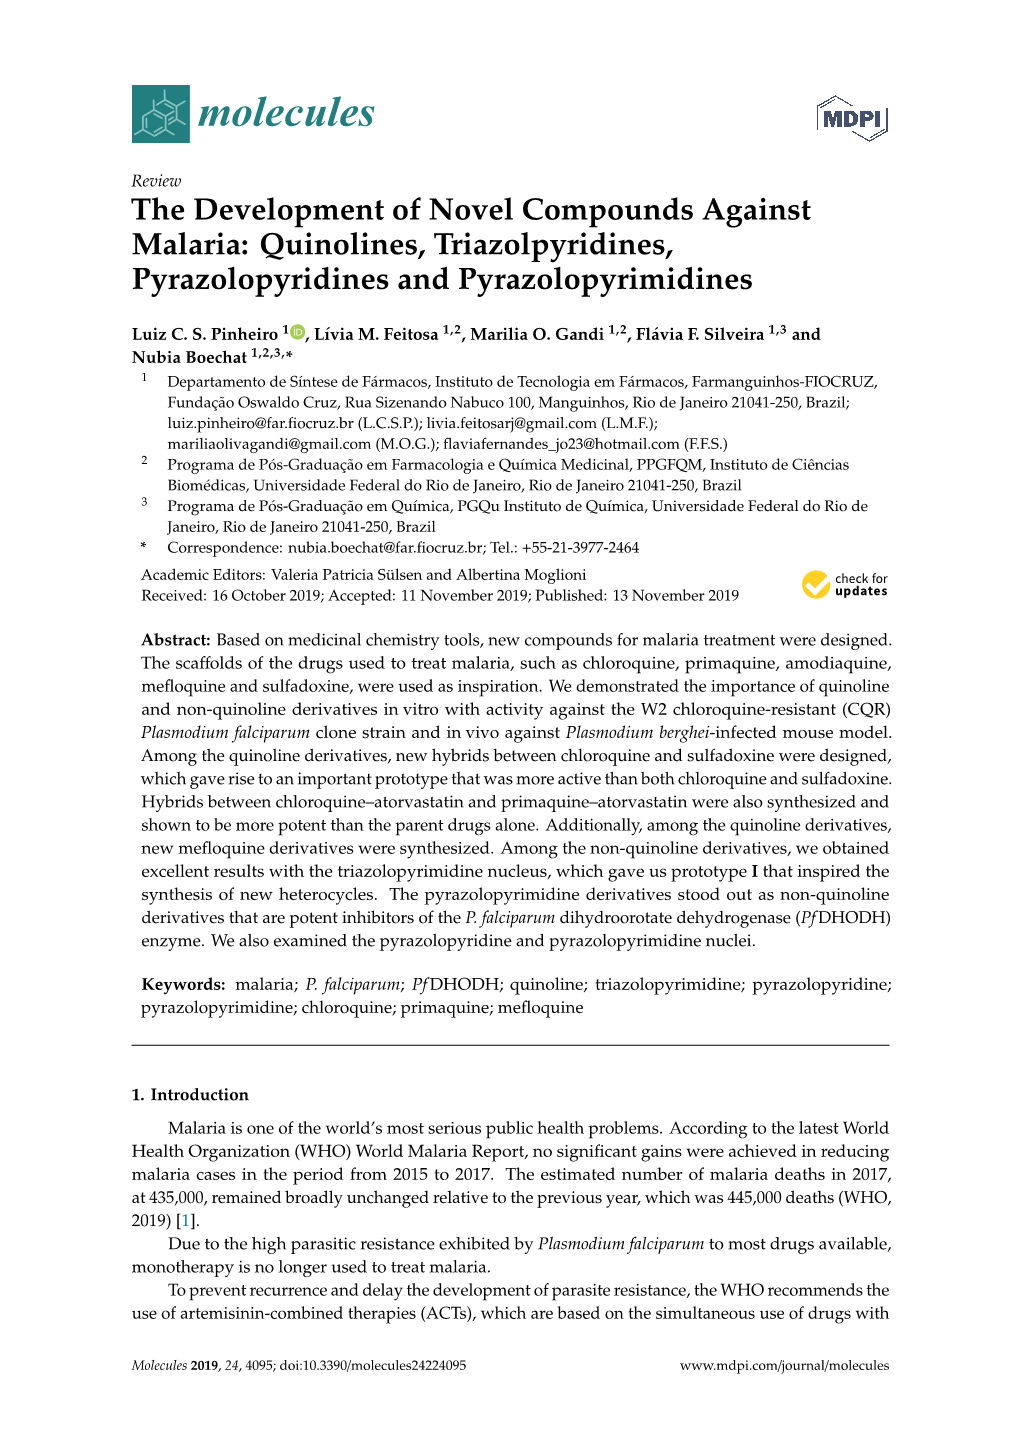 The Development of Novel Compounds Against Malaria: Quinolines, Triazolpyridines, Pyrazolopyridines and Pyrazolopyrimidines